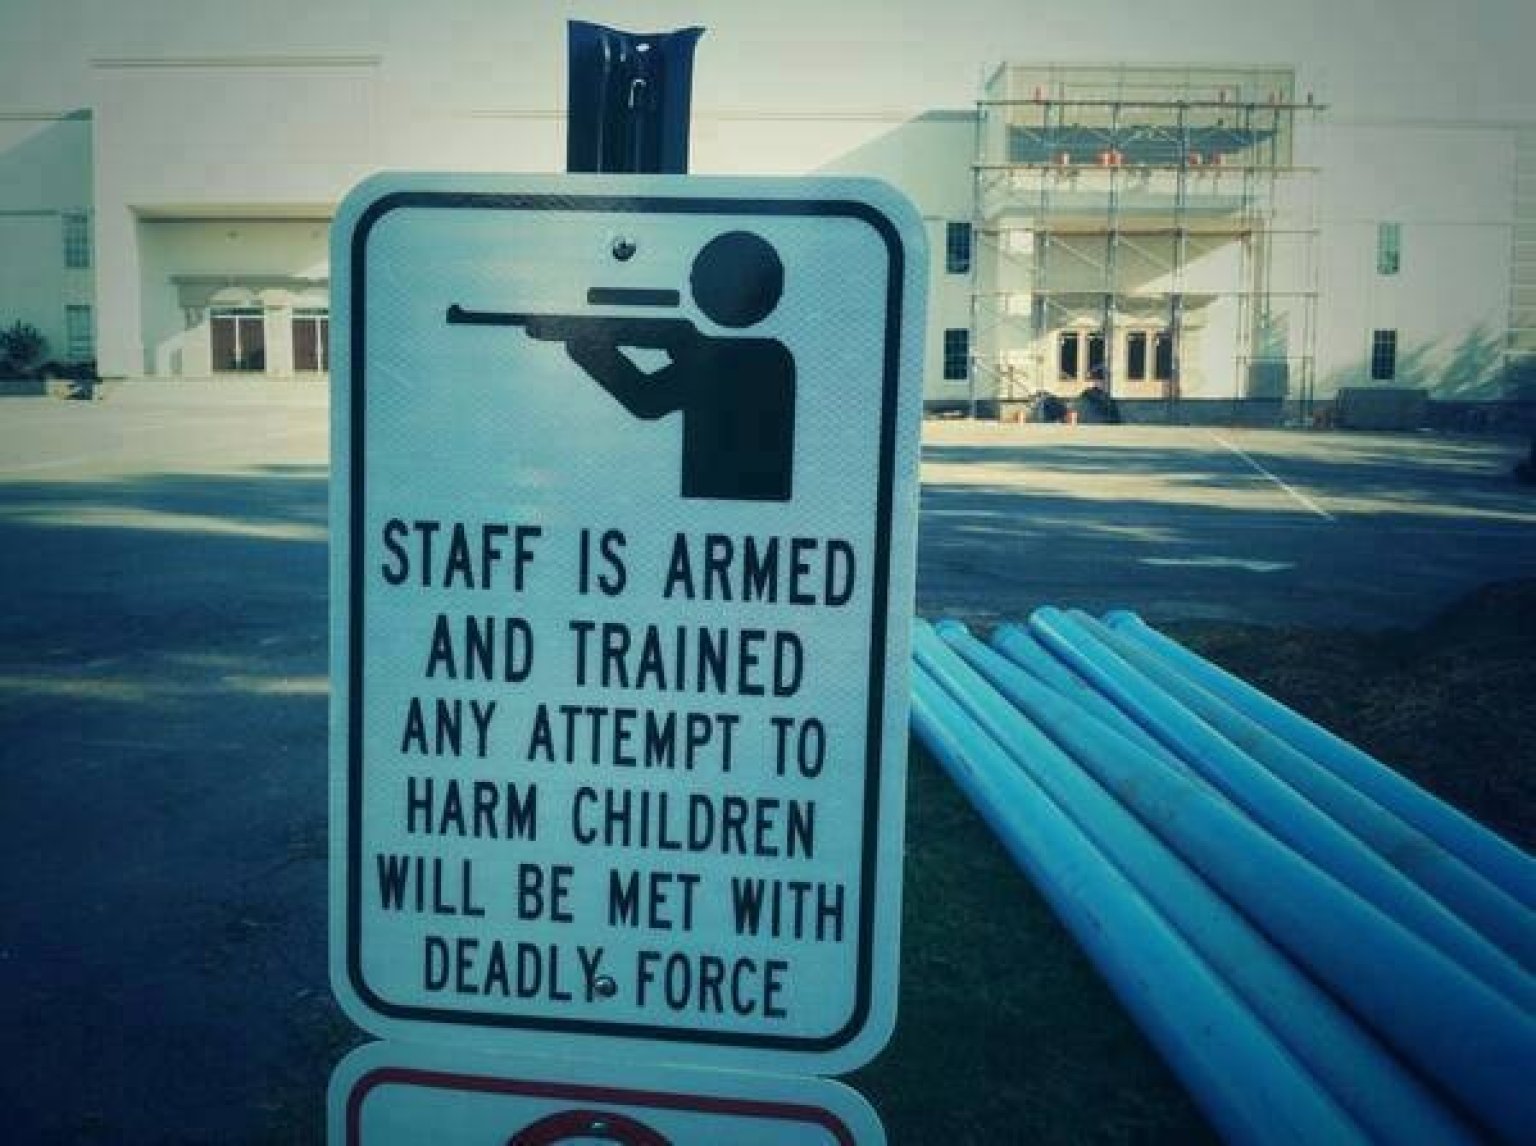 Arkansas Christian Academy Arms Staff, Posts Gun Warning | HuffPost